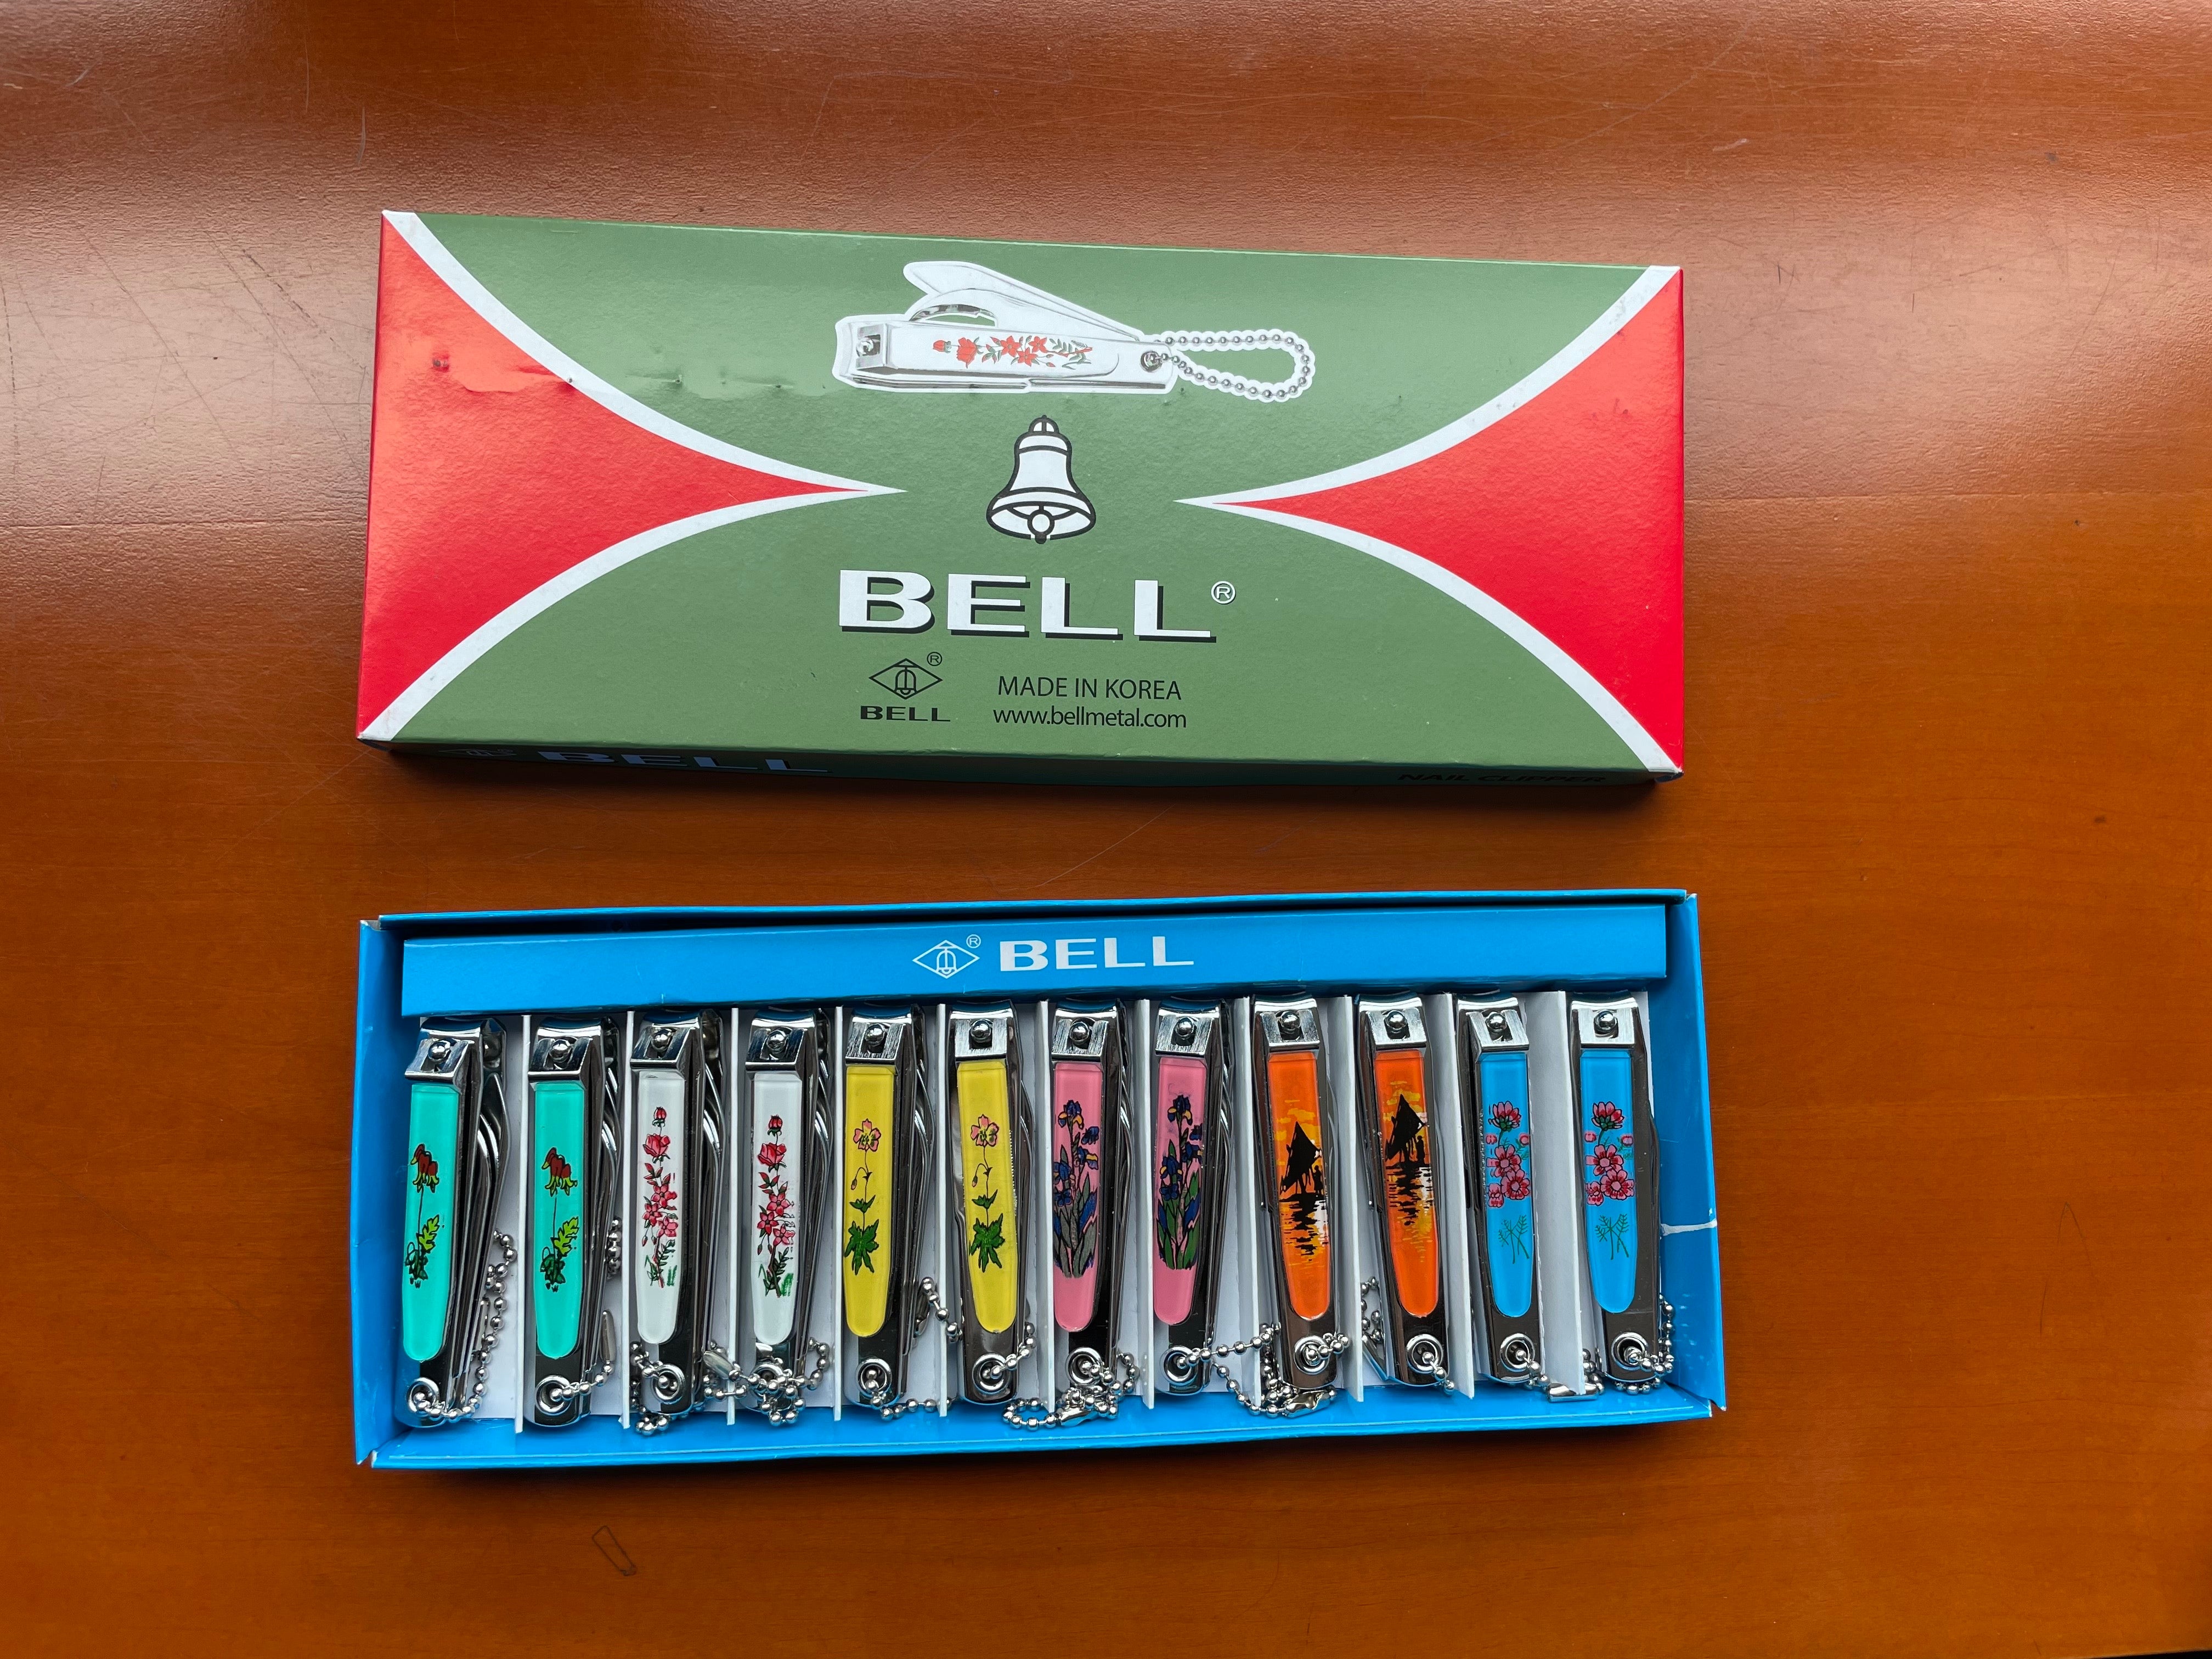 Bell Nail Cutter Made in Korea 1Box (12pcs)